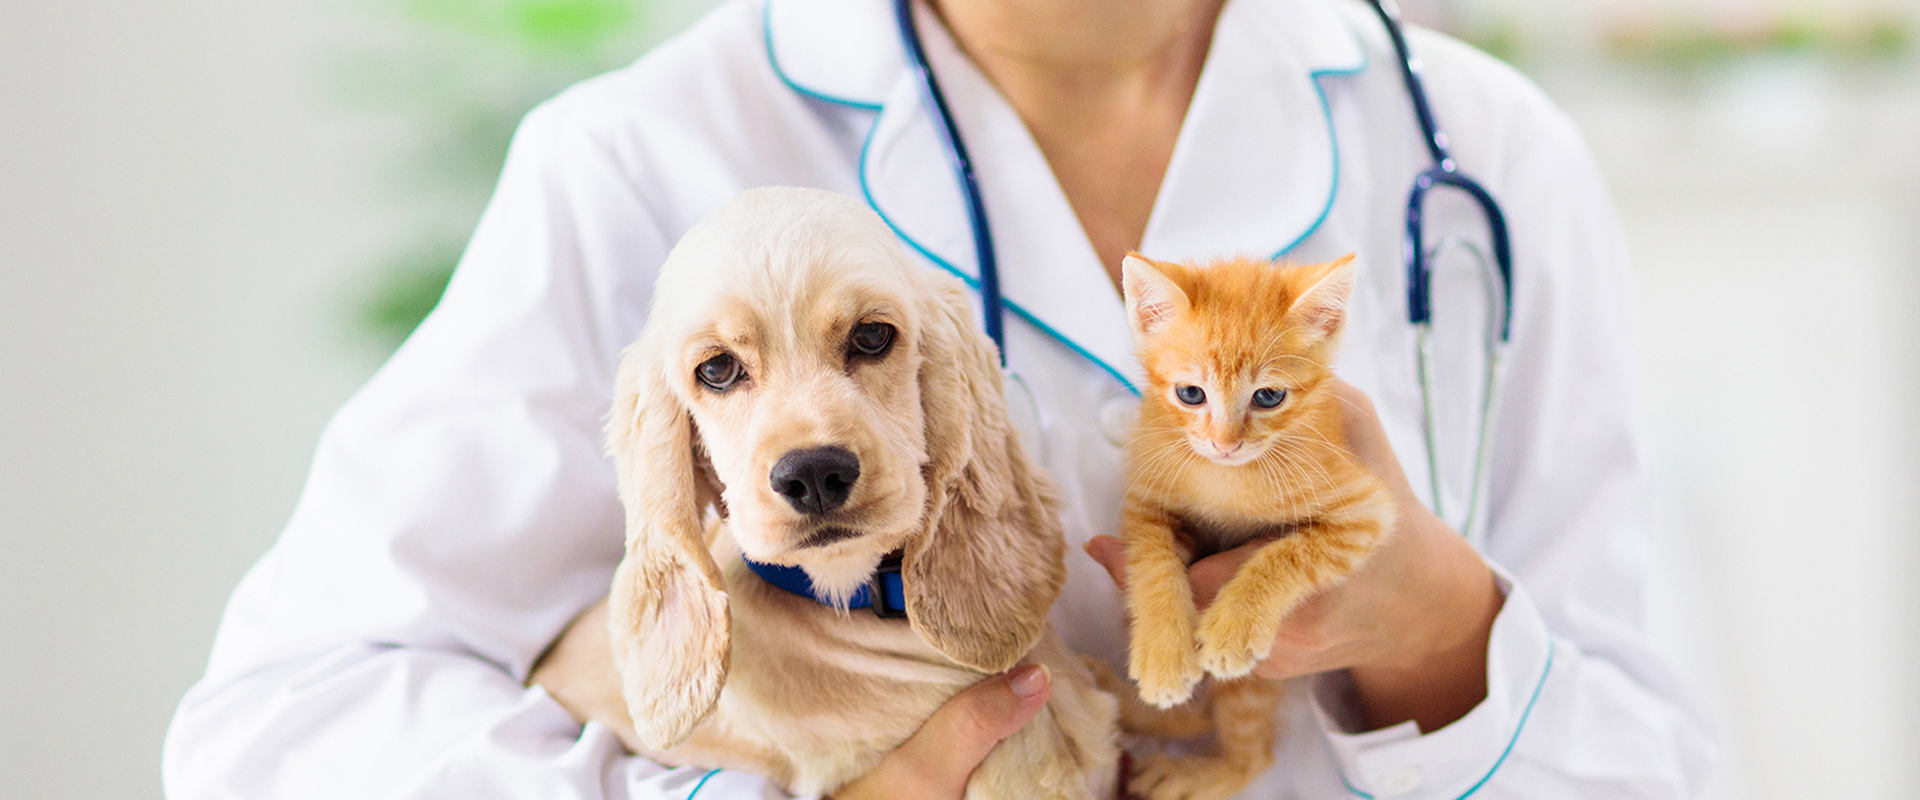 H Kτηνιατρική Κλινική V3TS Veterinary Clinic στη Λάρνακα ζητά κτηνίατρο